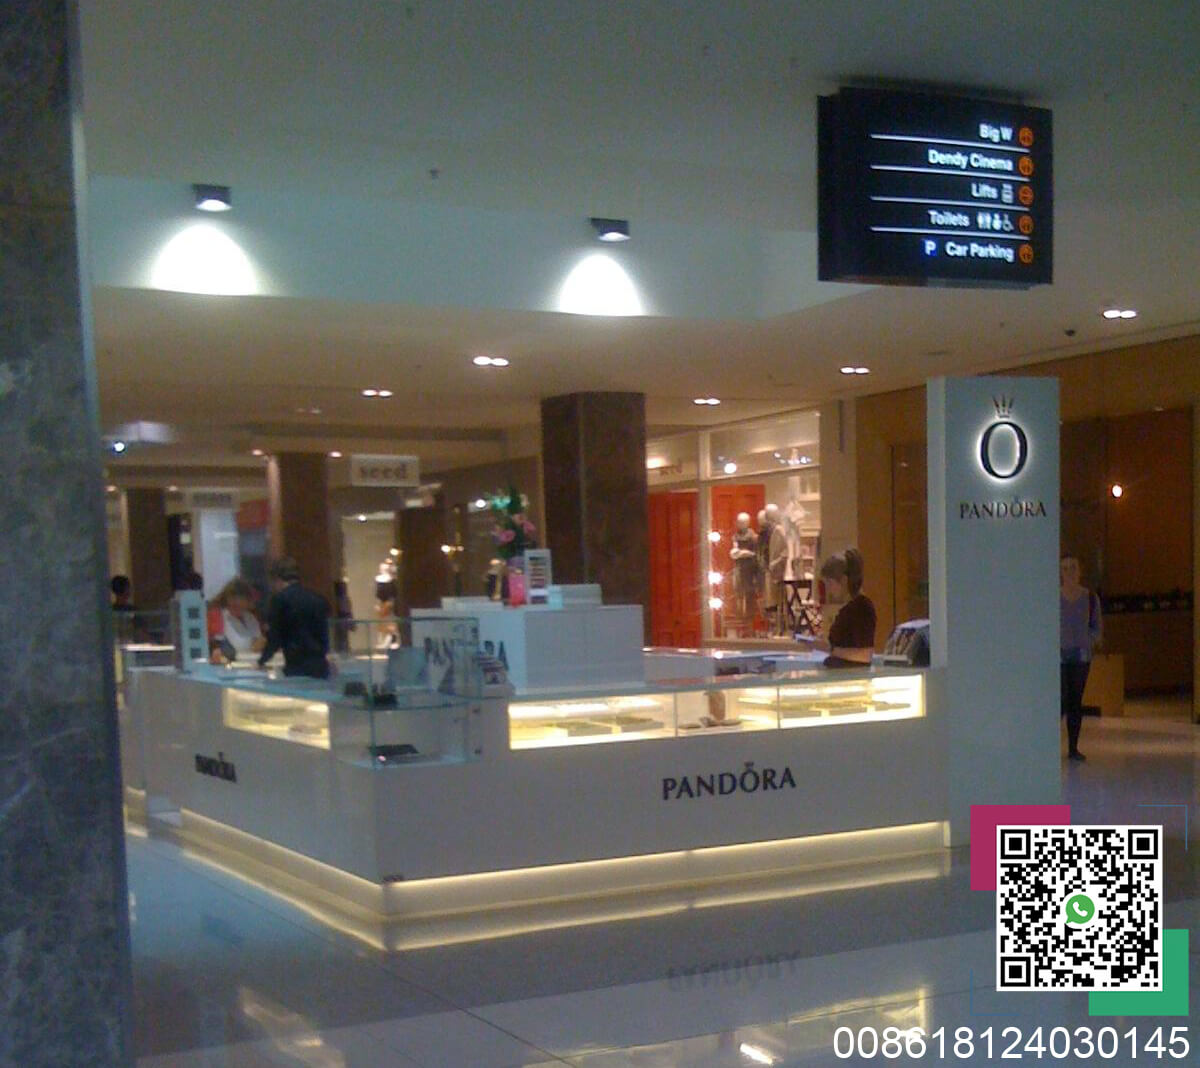 Pandora jewelry kiosk in the mall